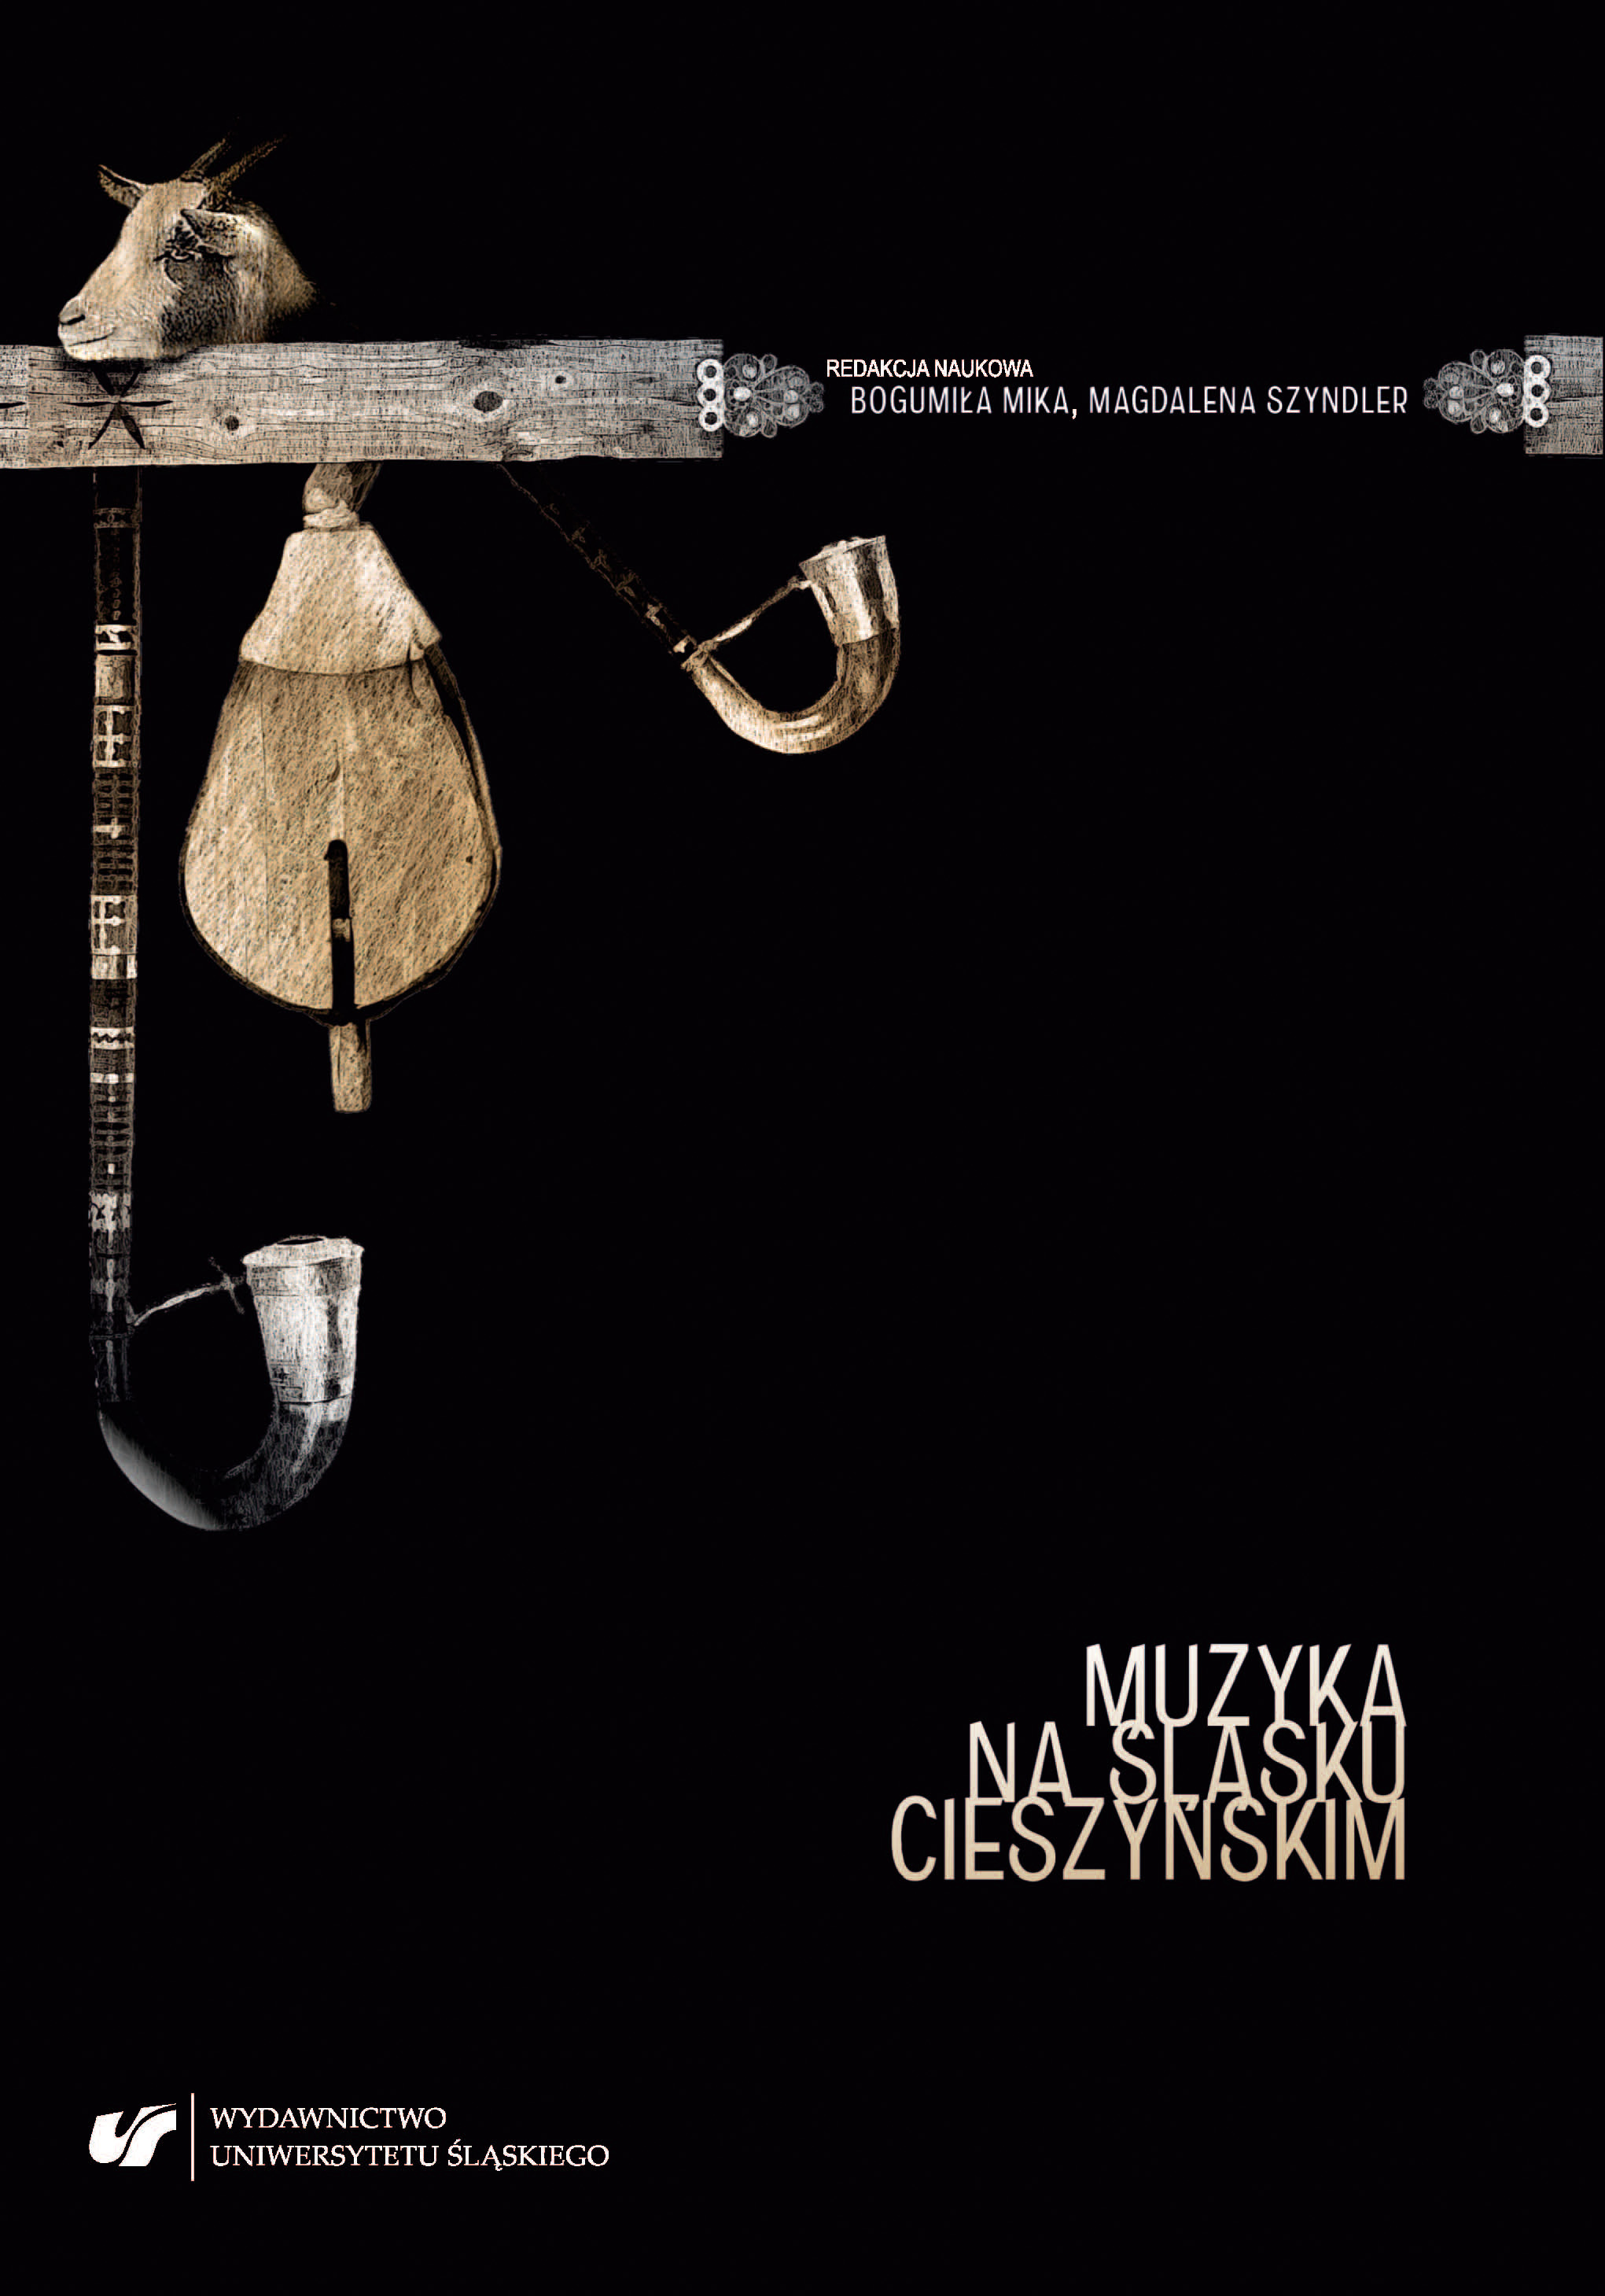 Music in Cieszyn Silesia Cover Image